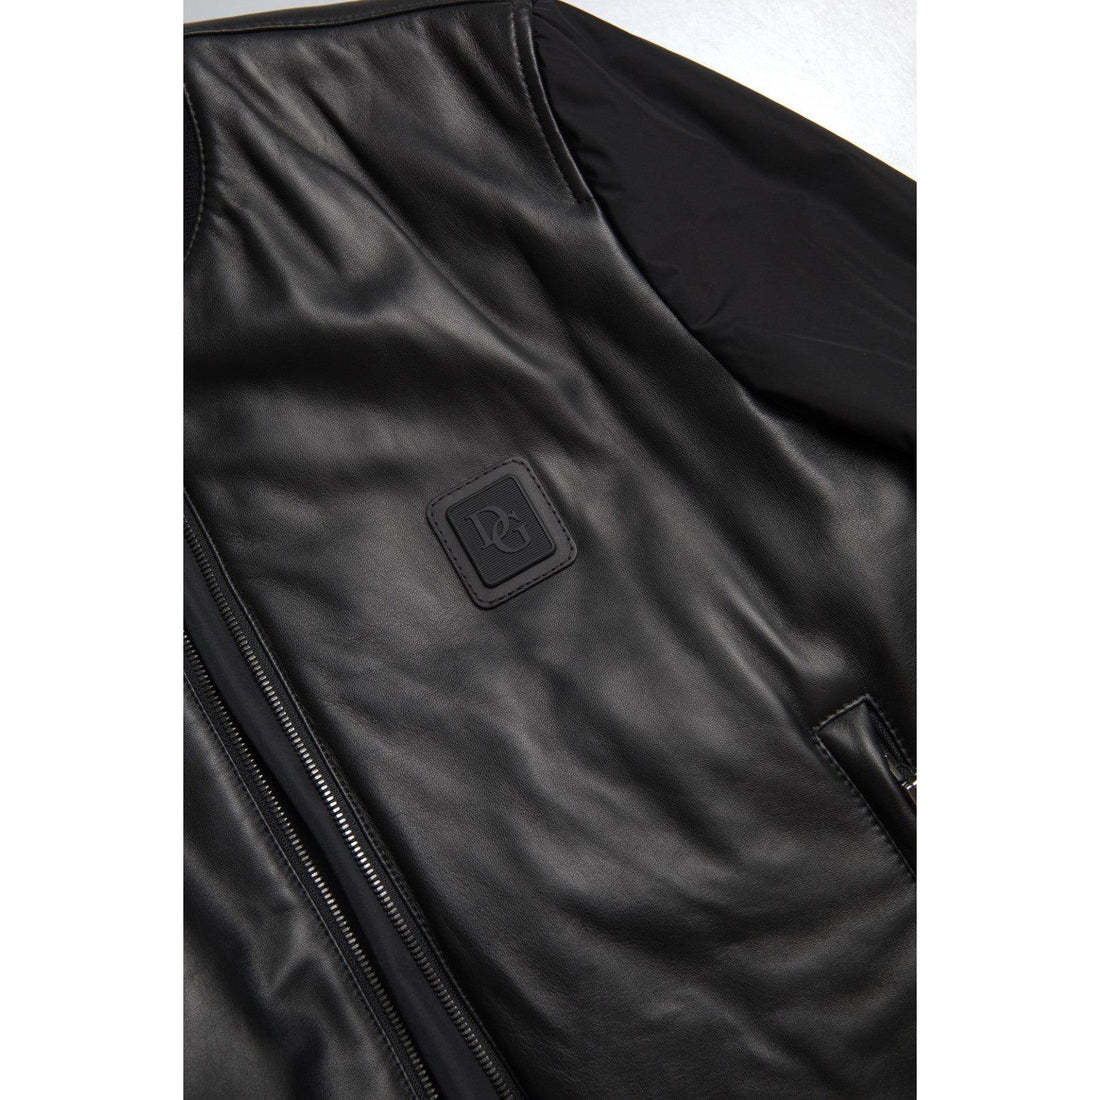 Dolce & Gabbana Black Polyester Full Zip Bomber Coat Jacket